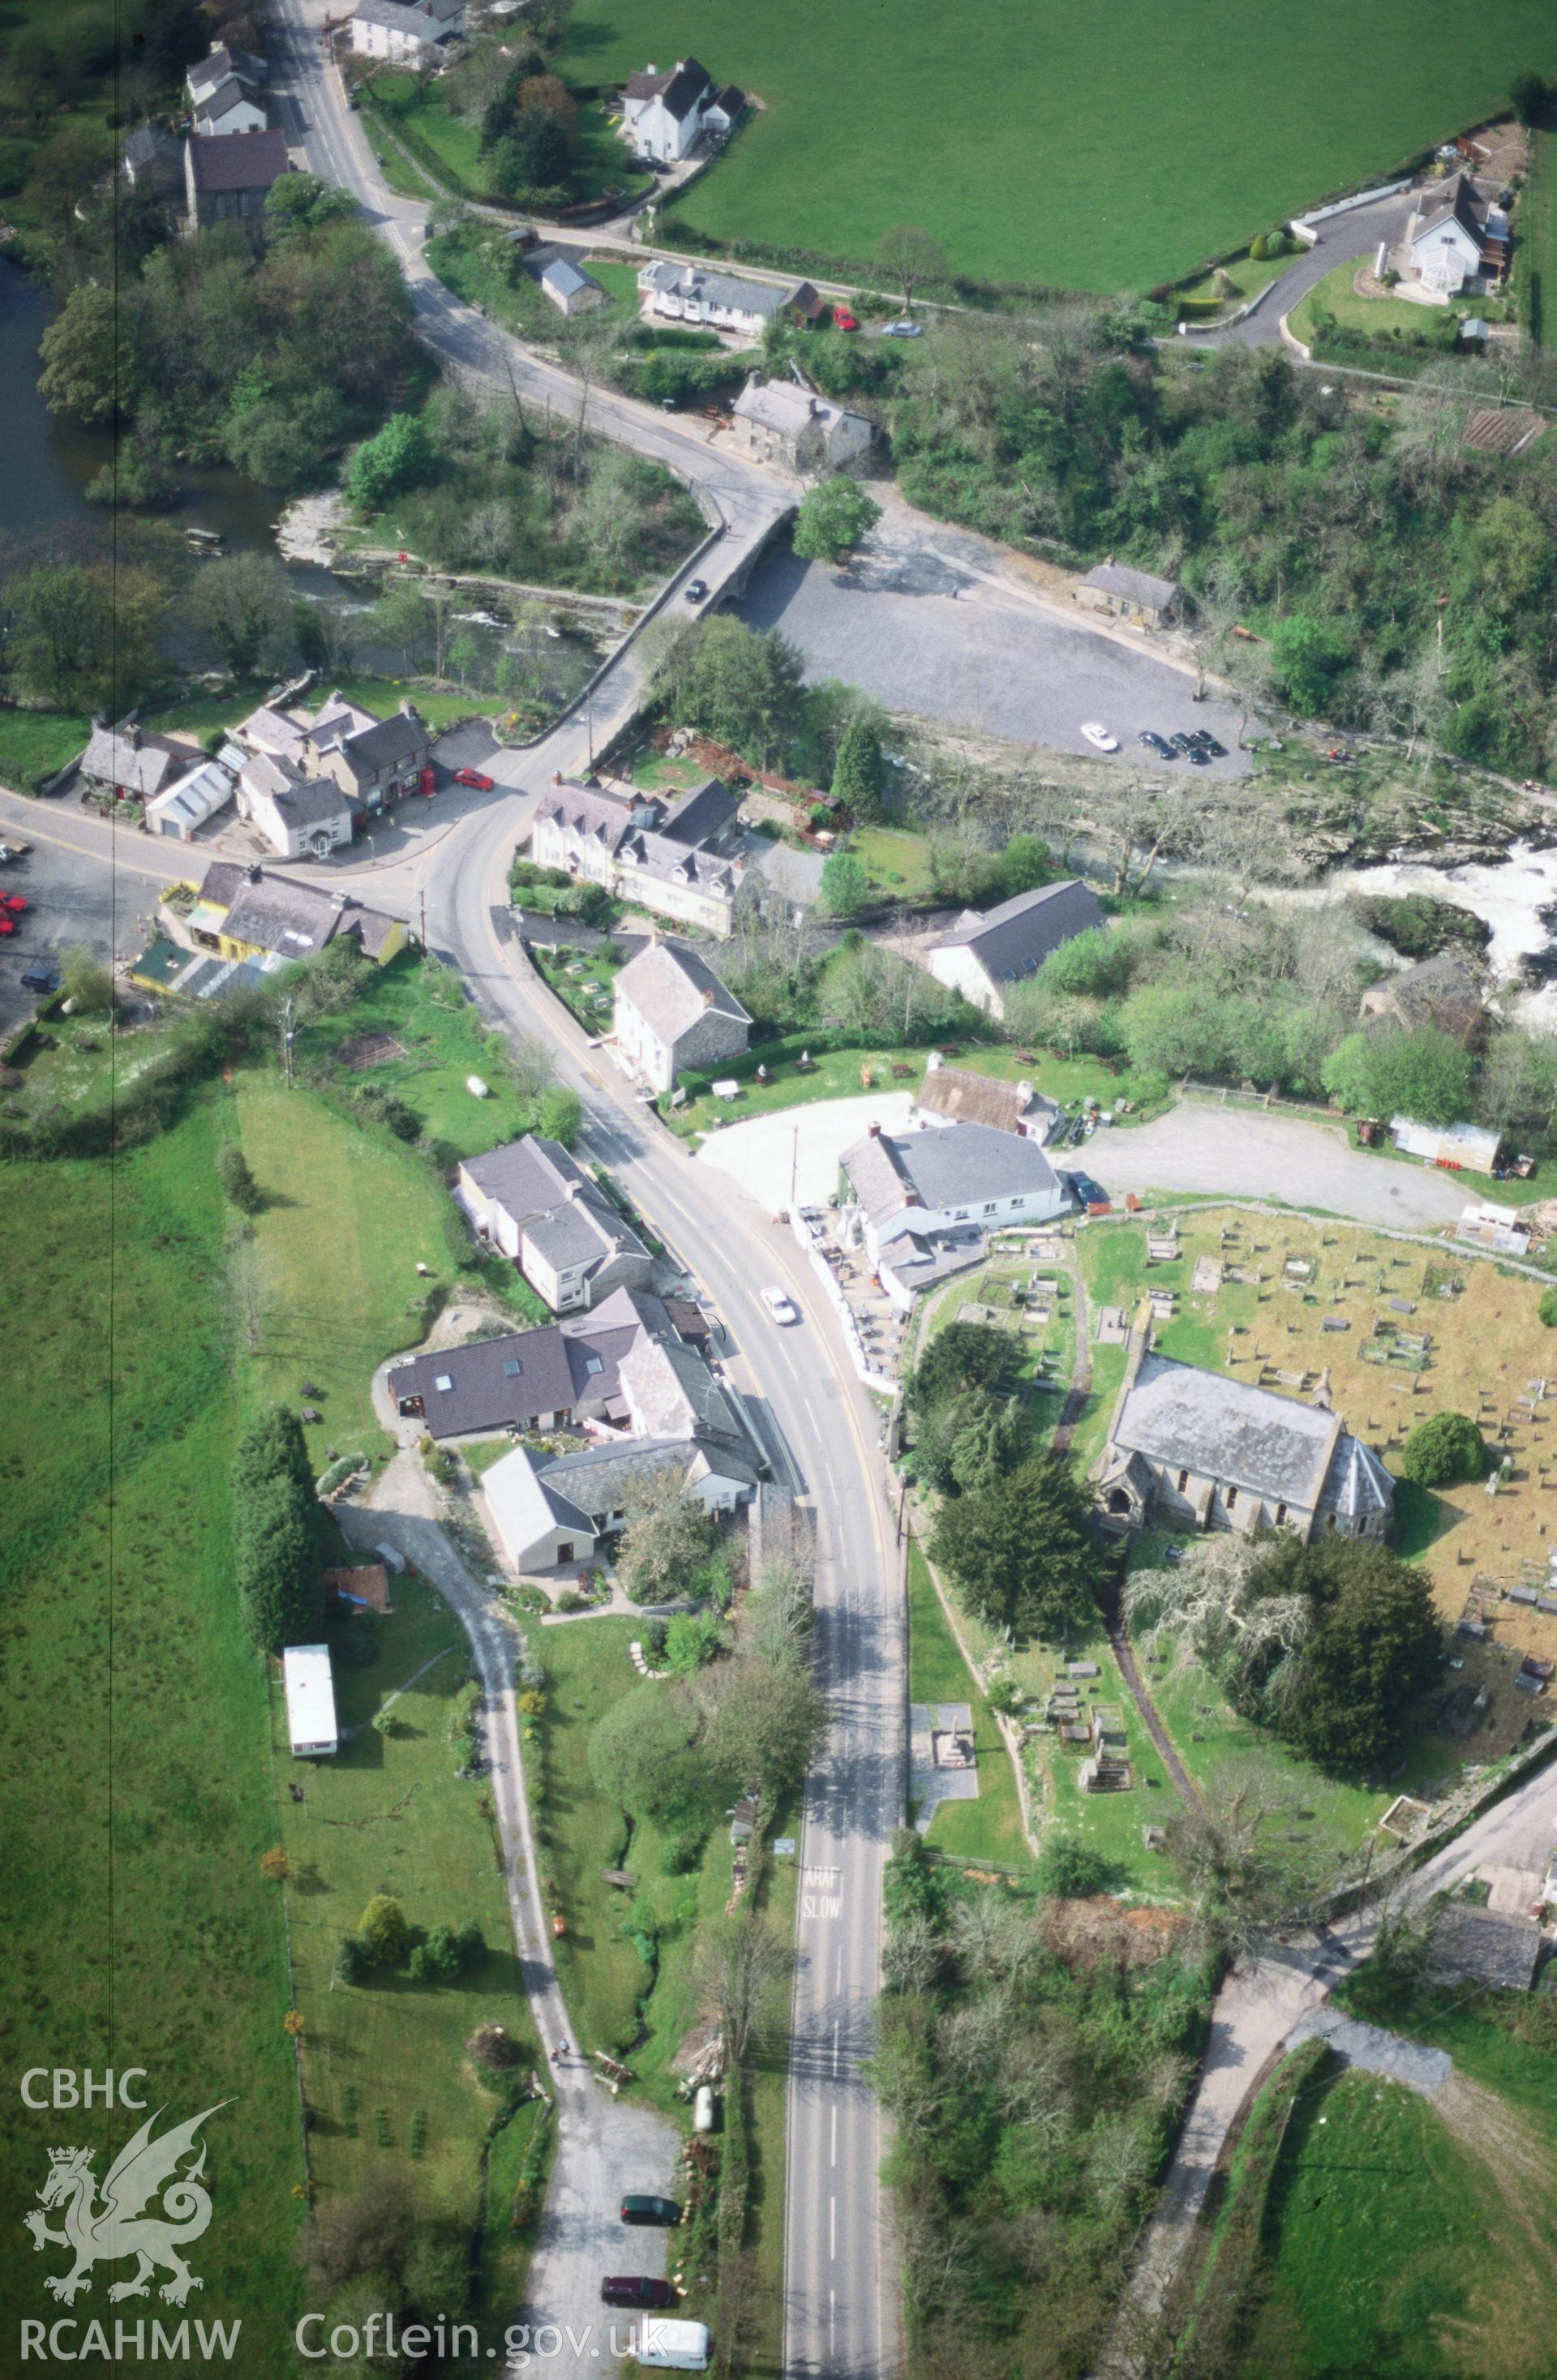 Slide of RCAHMW colour oblique aerial photograph of Cenarth, taken by T.G. Driver, 27/4/1999.